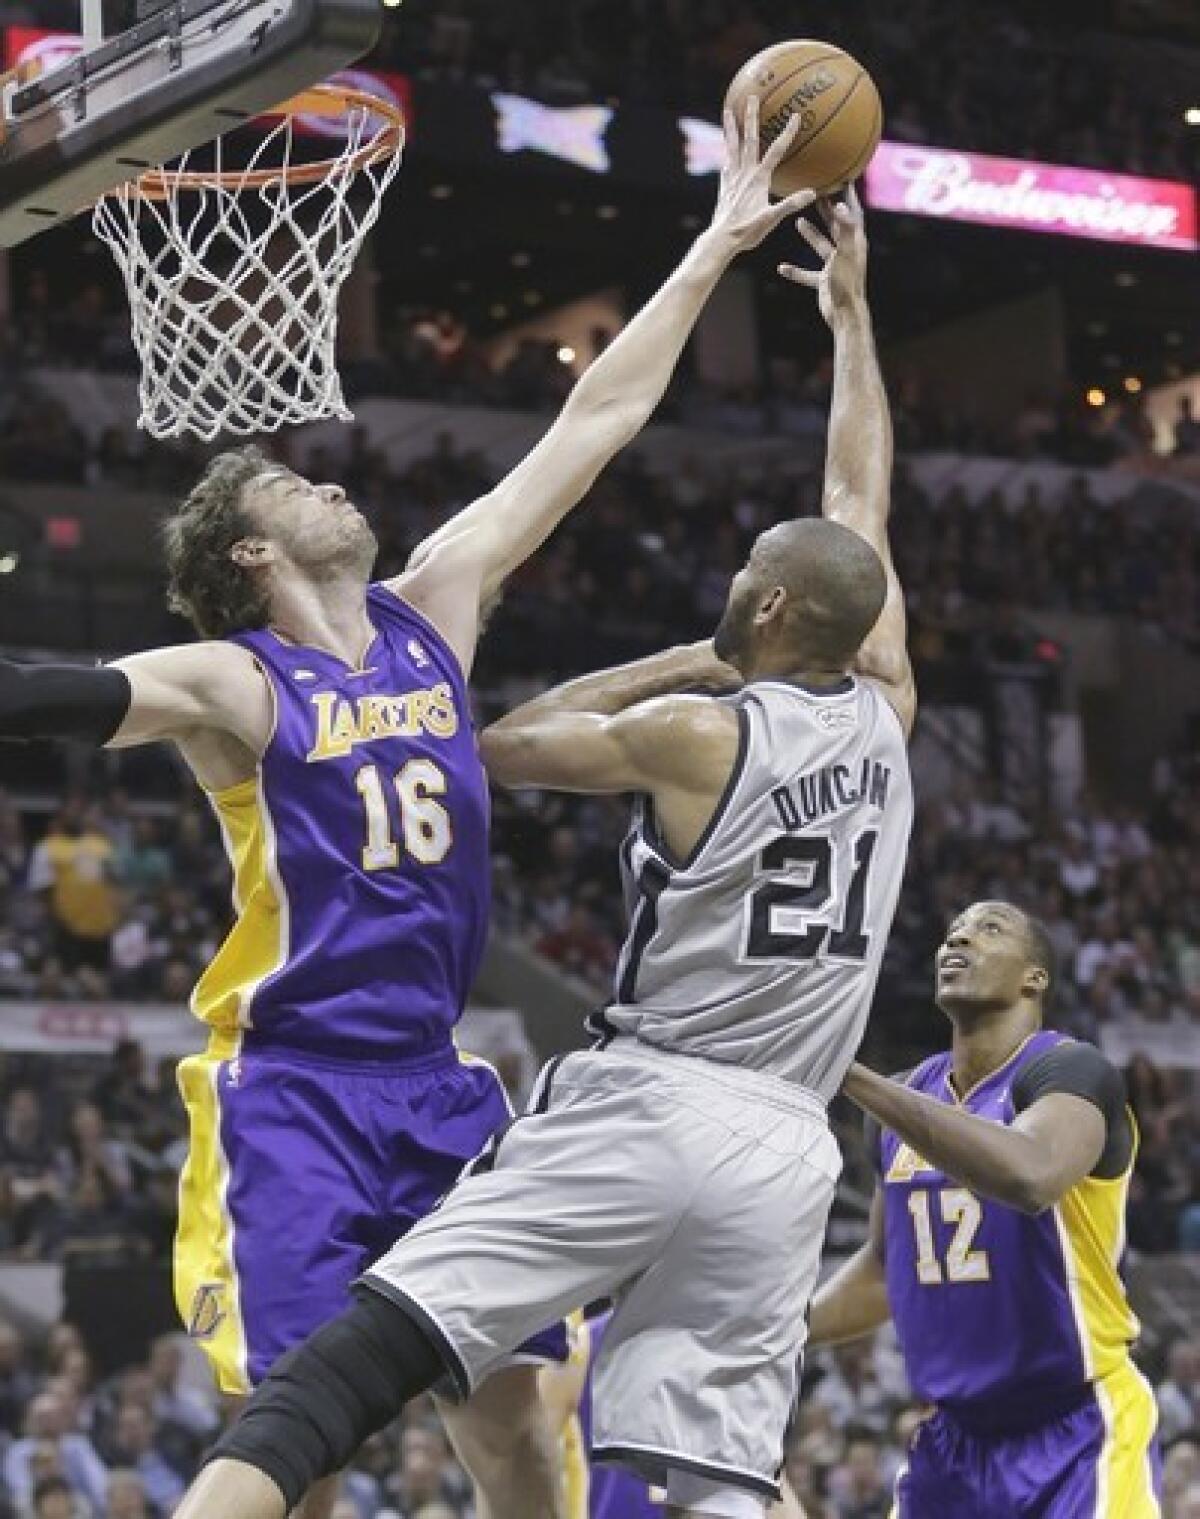 Lakers power forward Pau Gasol blocks a shot by Spurs power forward Tim Duncan.